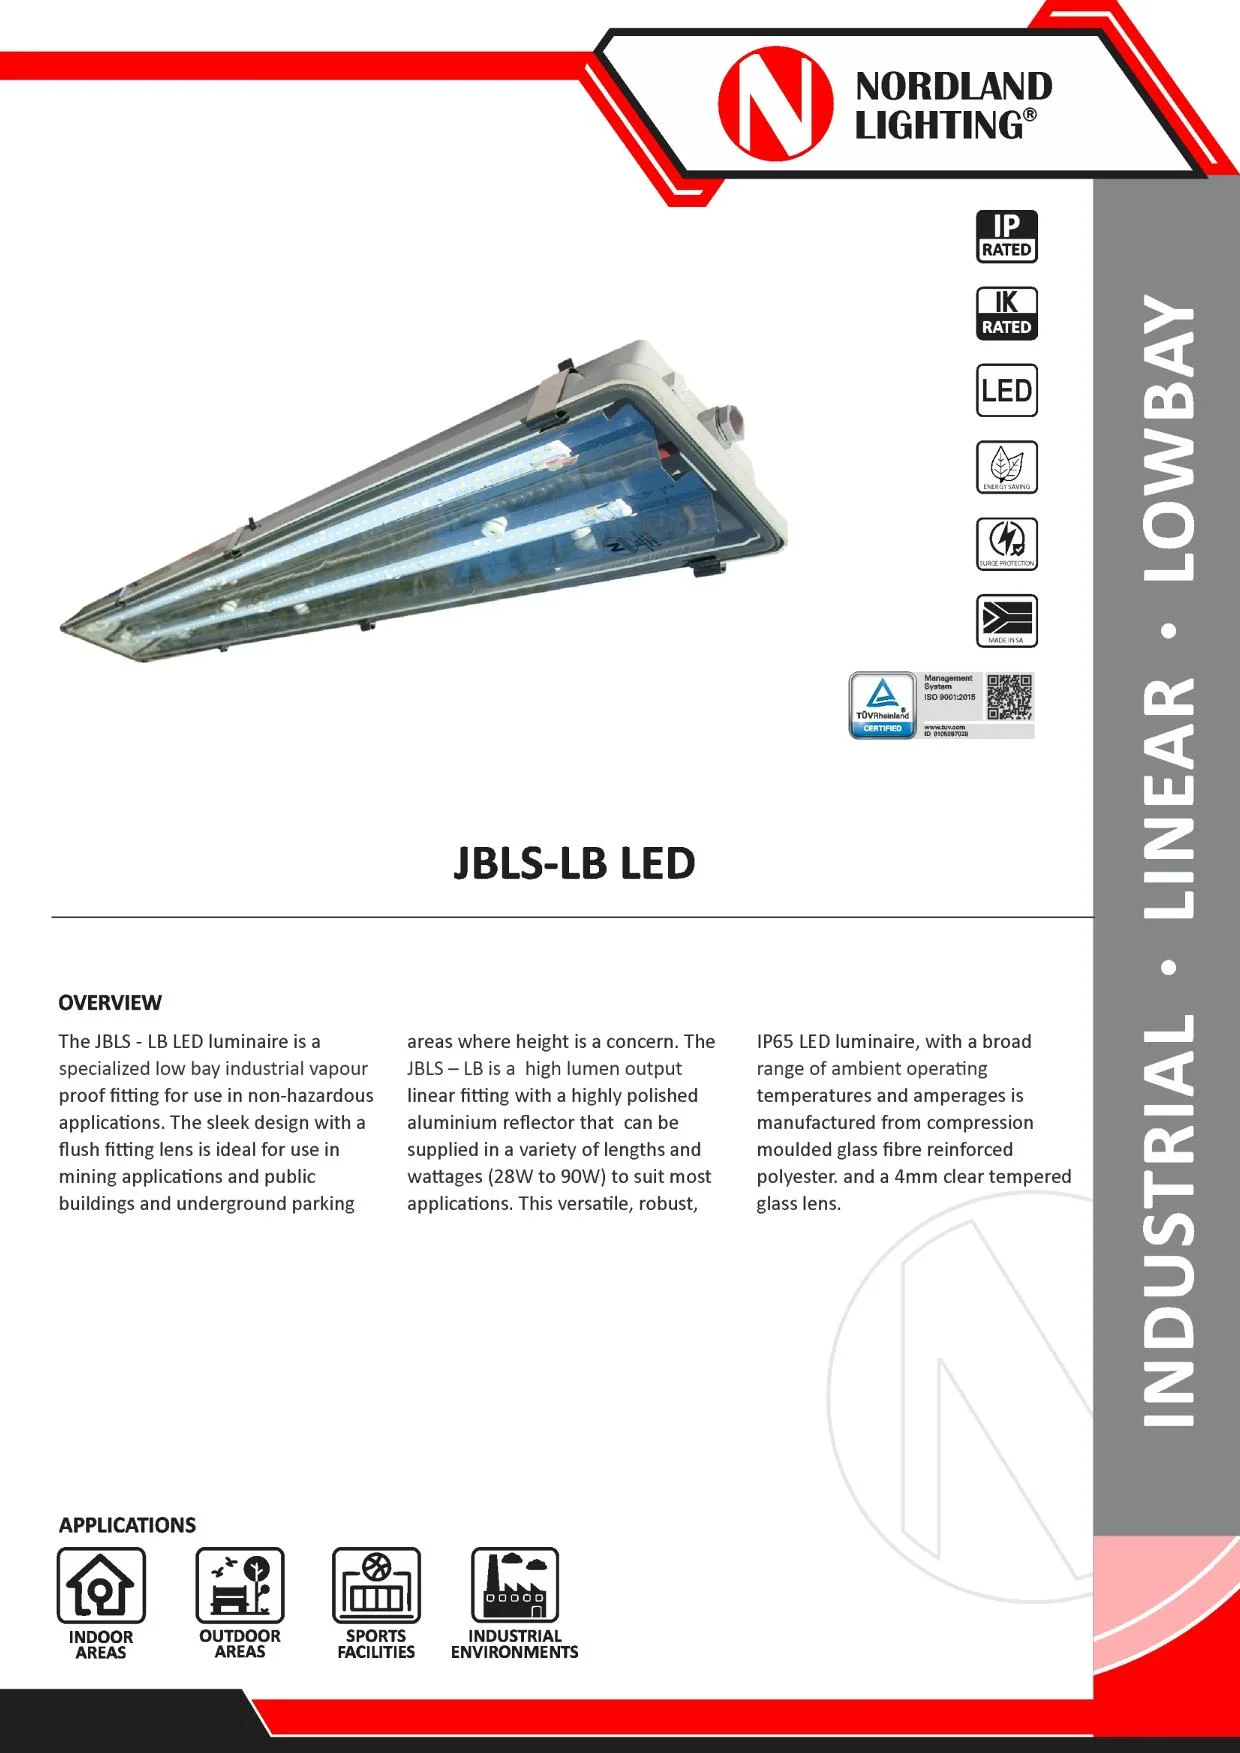 NL49 Nordland JBLS-LB LED Low Bay Industrial Luminaire